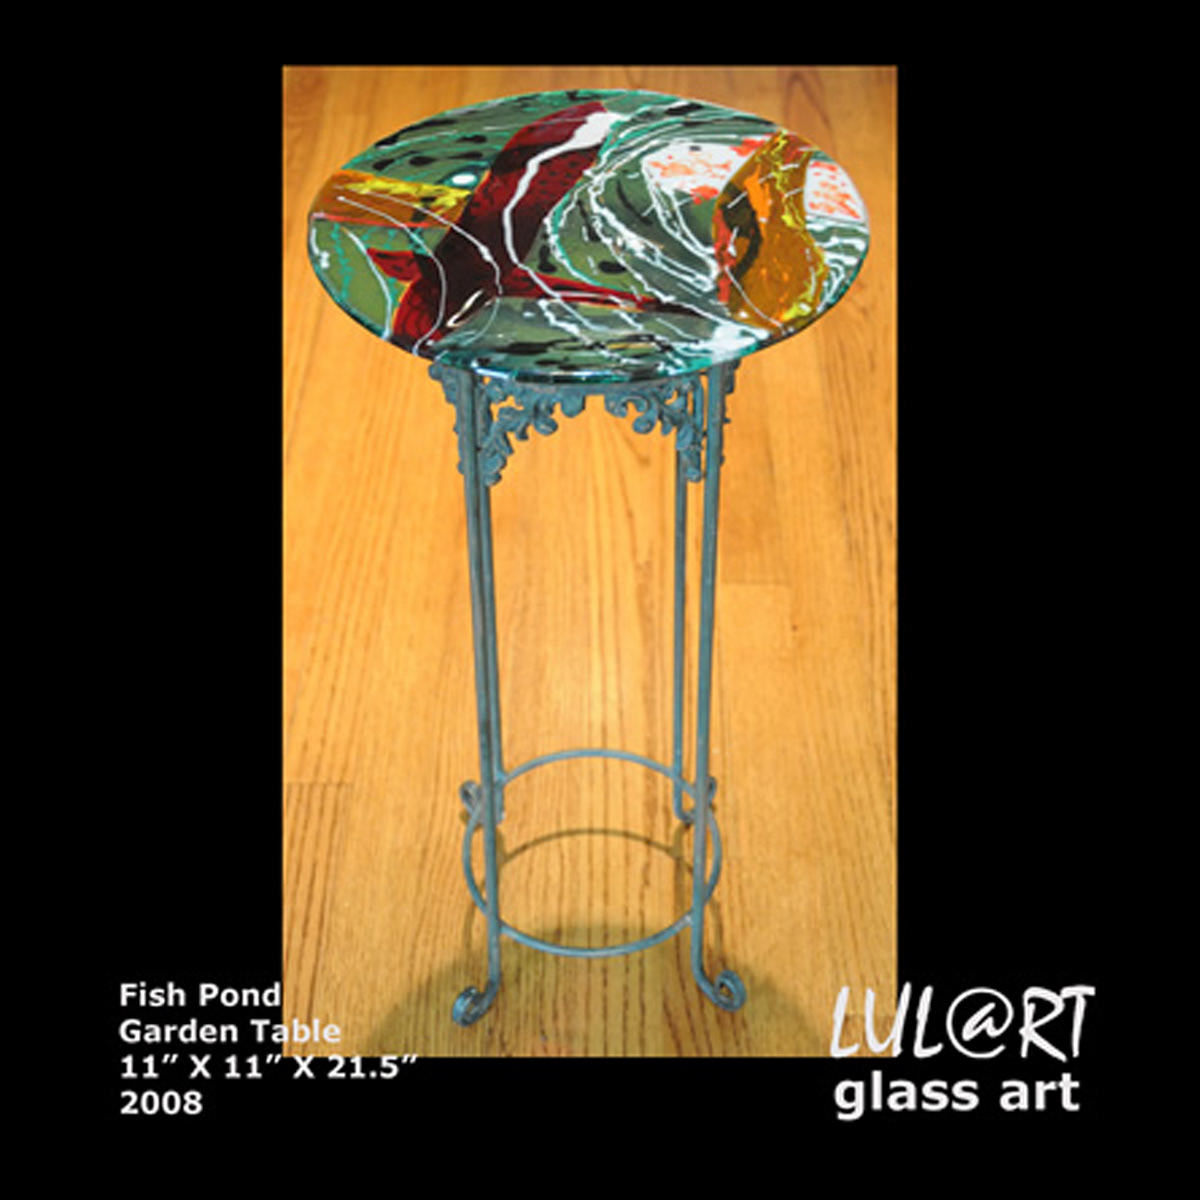 glass art fused glass Unique kiln formed Artist Handmade artistic Exclusive Exceptional Rare Distinctive Single singular Extraordinary Sculpture